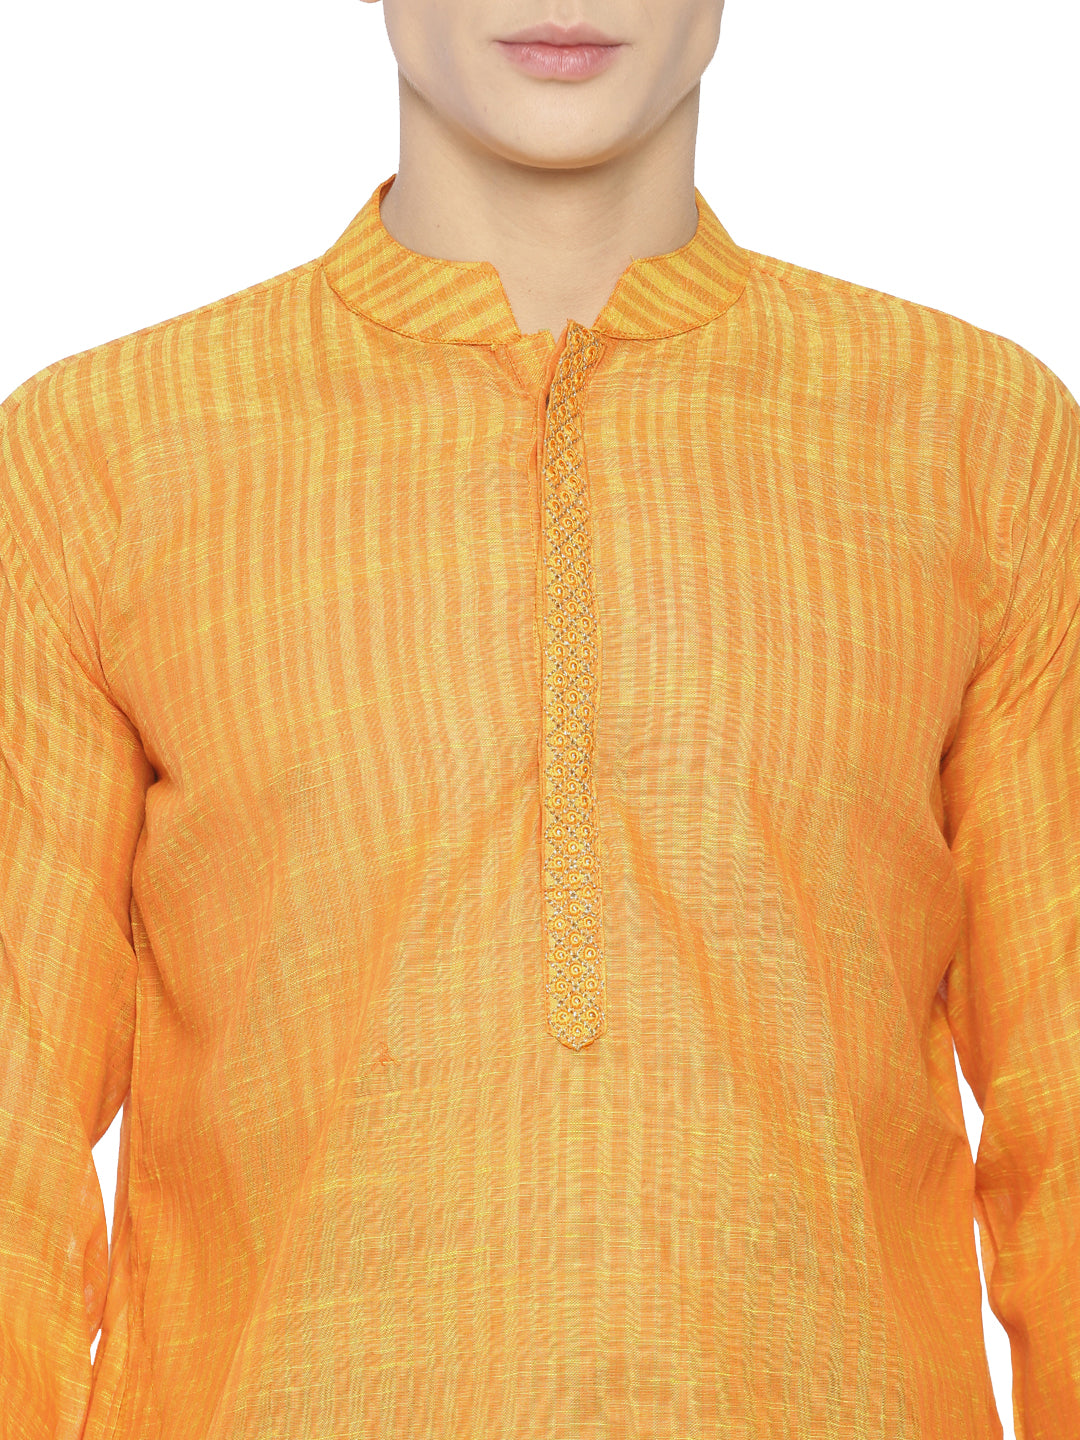 PAROKSH Men's Embroidered Orange Handloom Long Cotton Ethnic Kurta